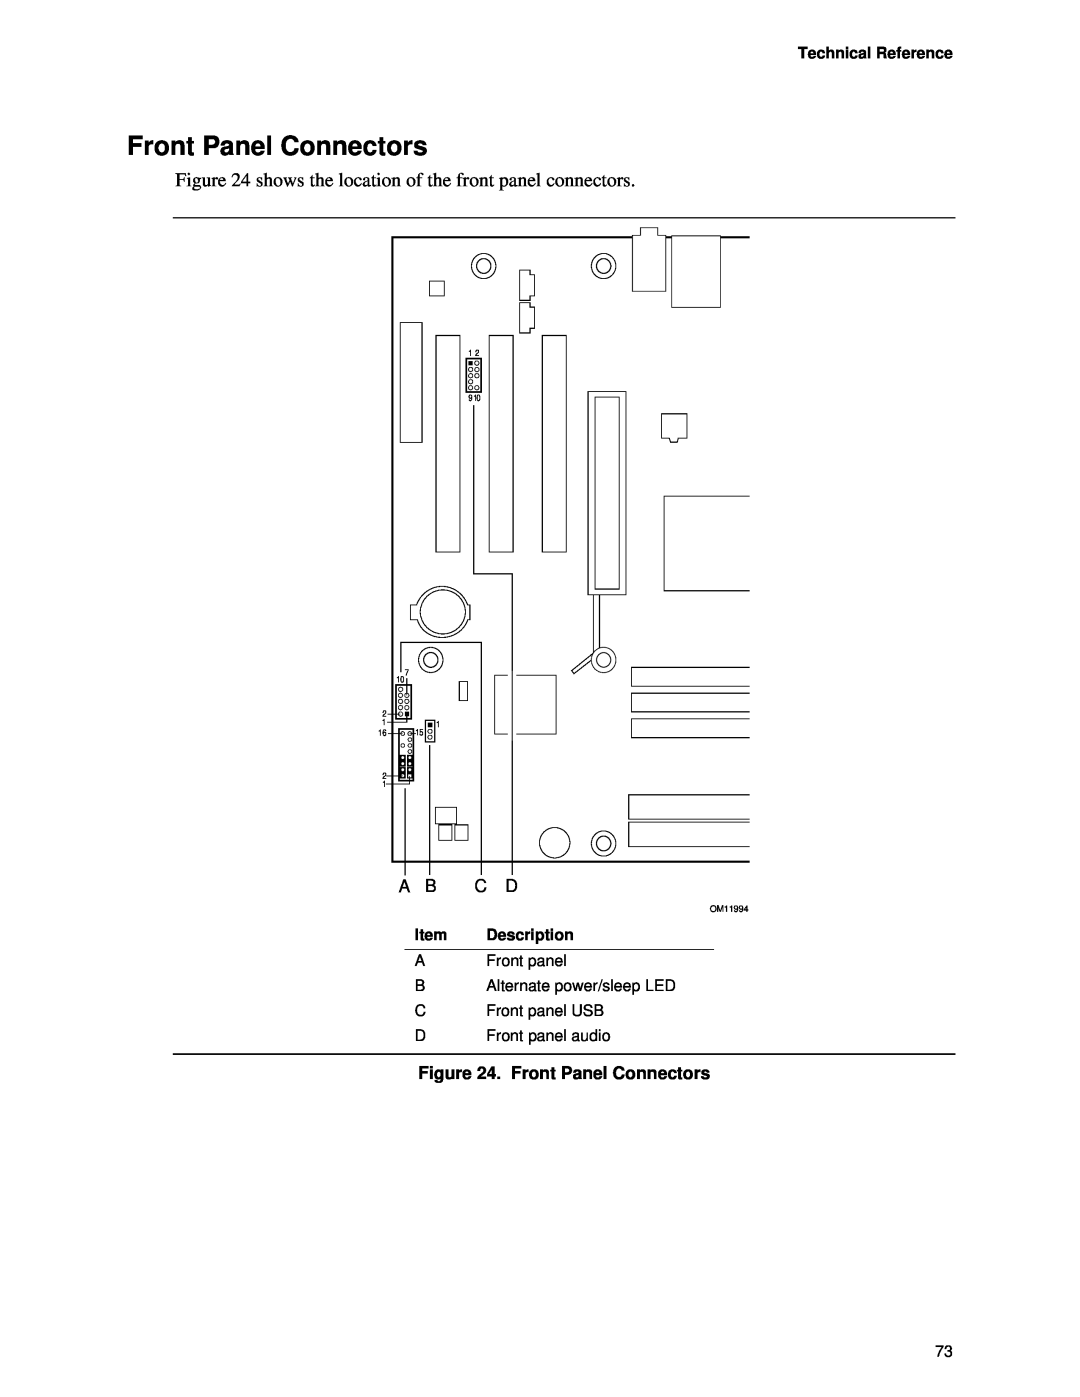 Intel D845HV, D845WN manual Front Panel Connectors, Technical Reference, Description, OM11994 